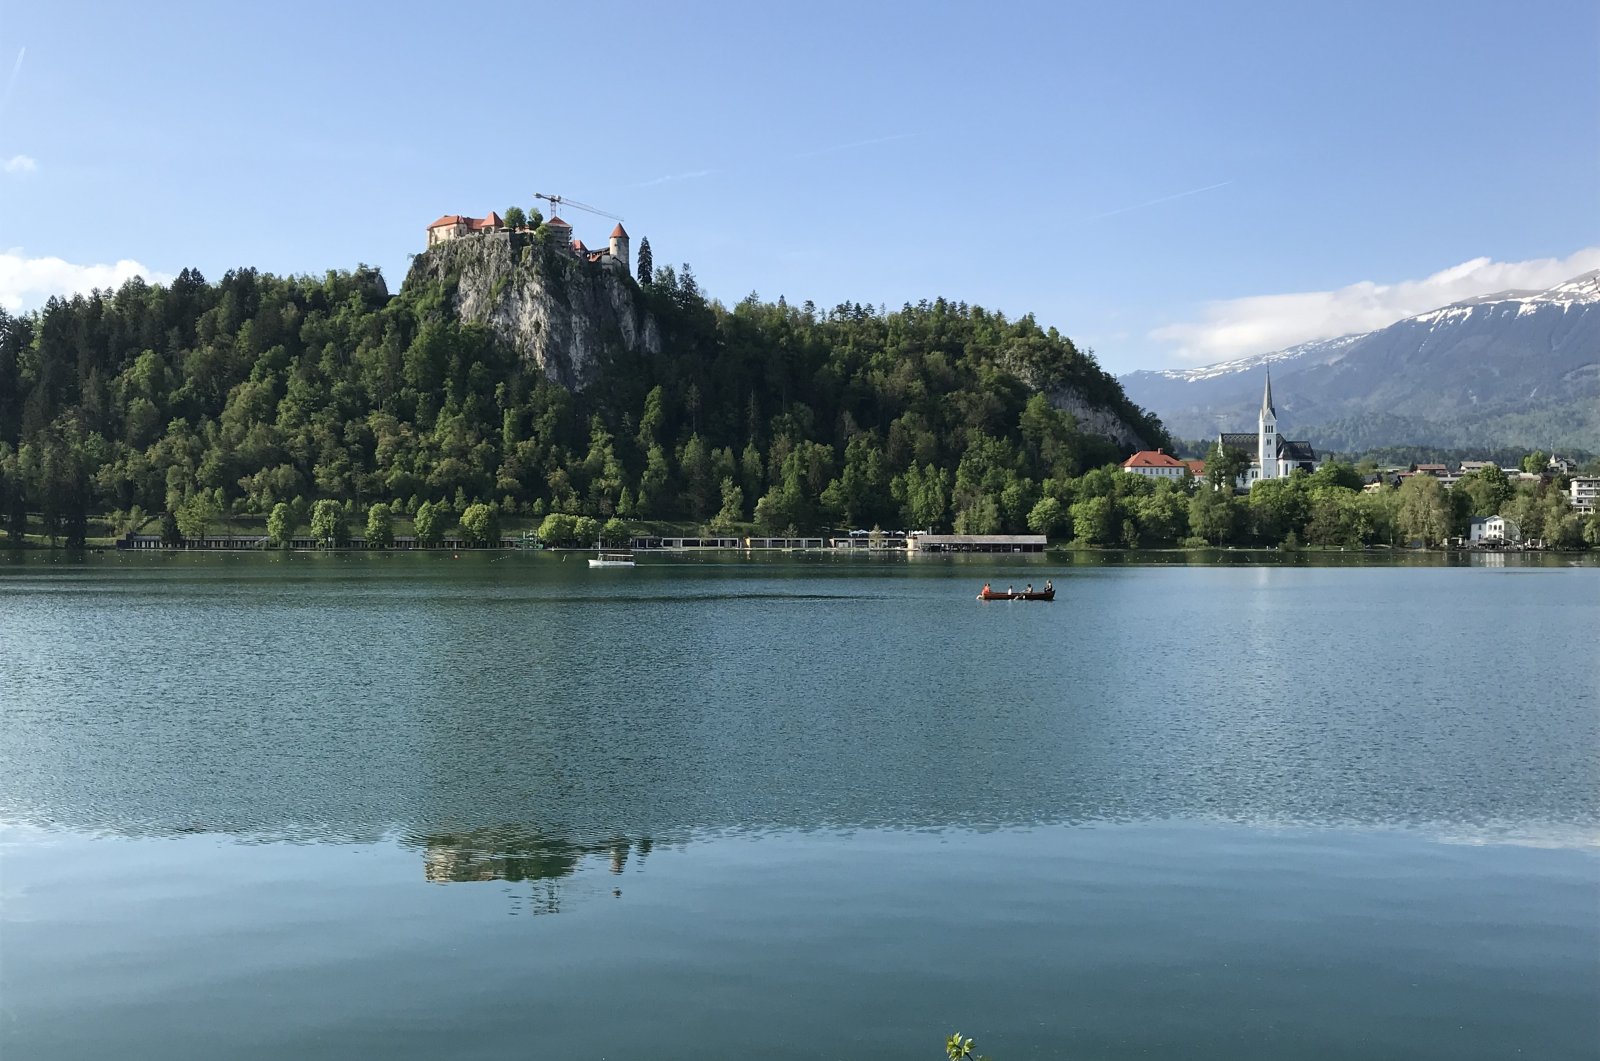 The castle and lake of Bled, Slovenia. (Photo by Özge Şengelen)